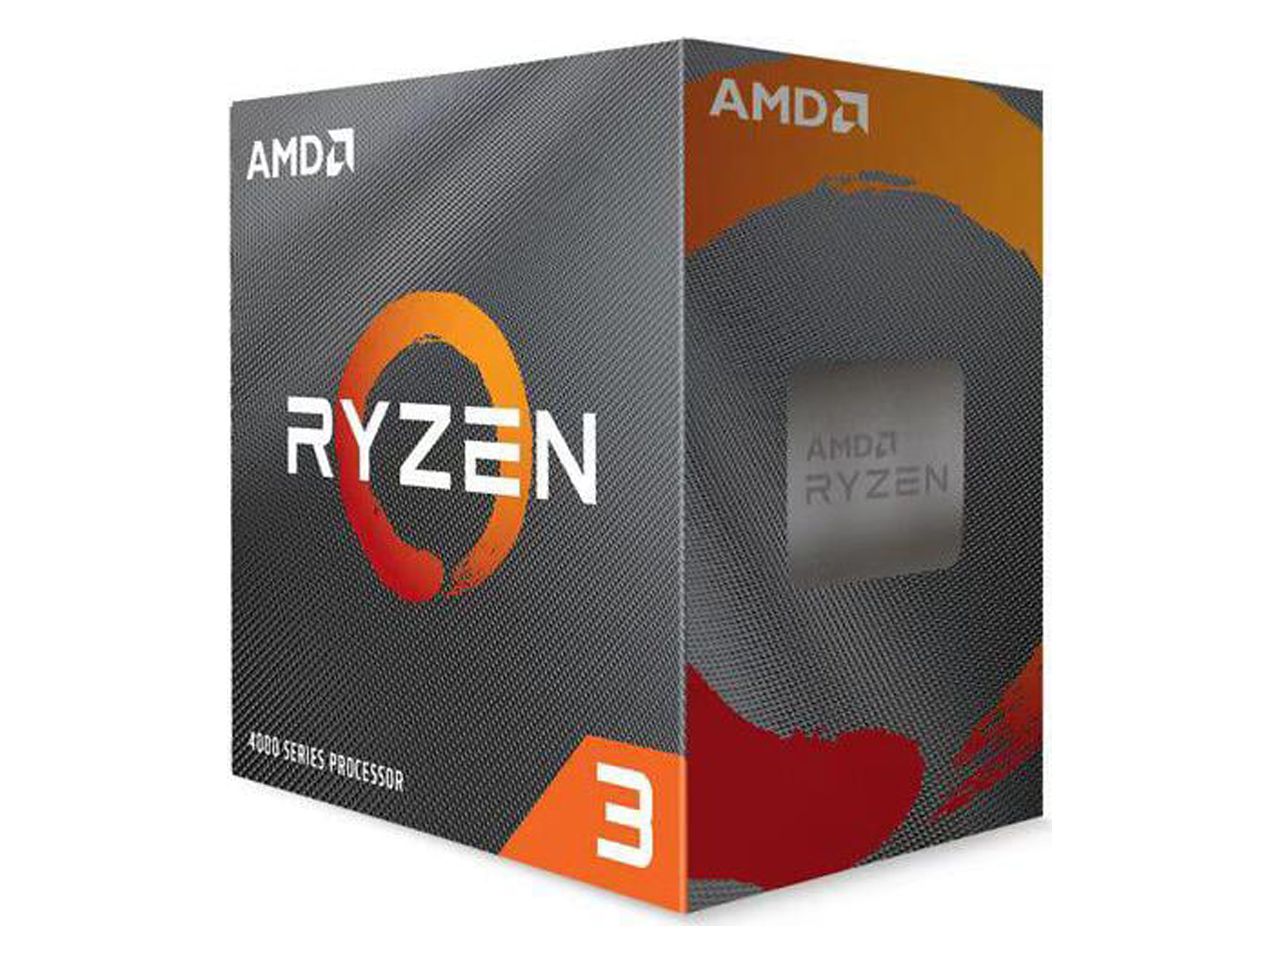 AMD Ryzen 3 4100 - Ryzen 3 4000 Series Quad-Core 3.8 GHz Socket AM4 65W None Integrated Graphics Desktop Processor - 100-100000510BOX - image 1 of 5